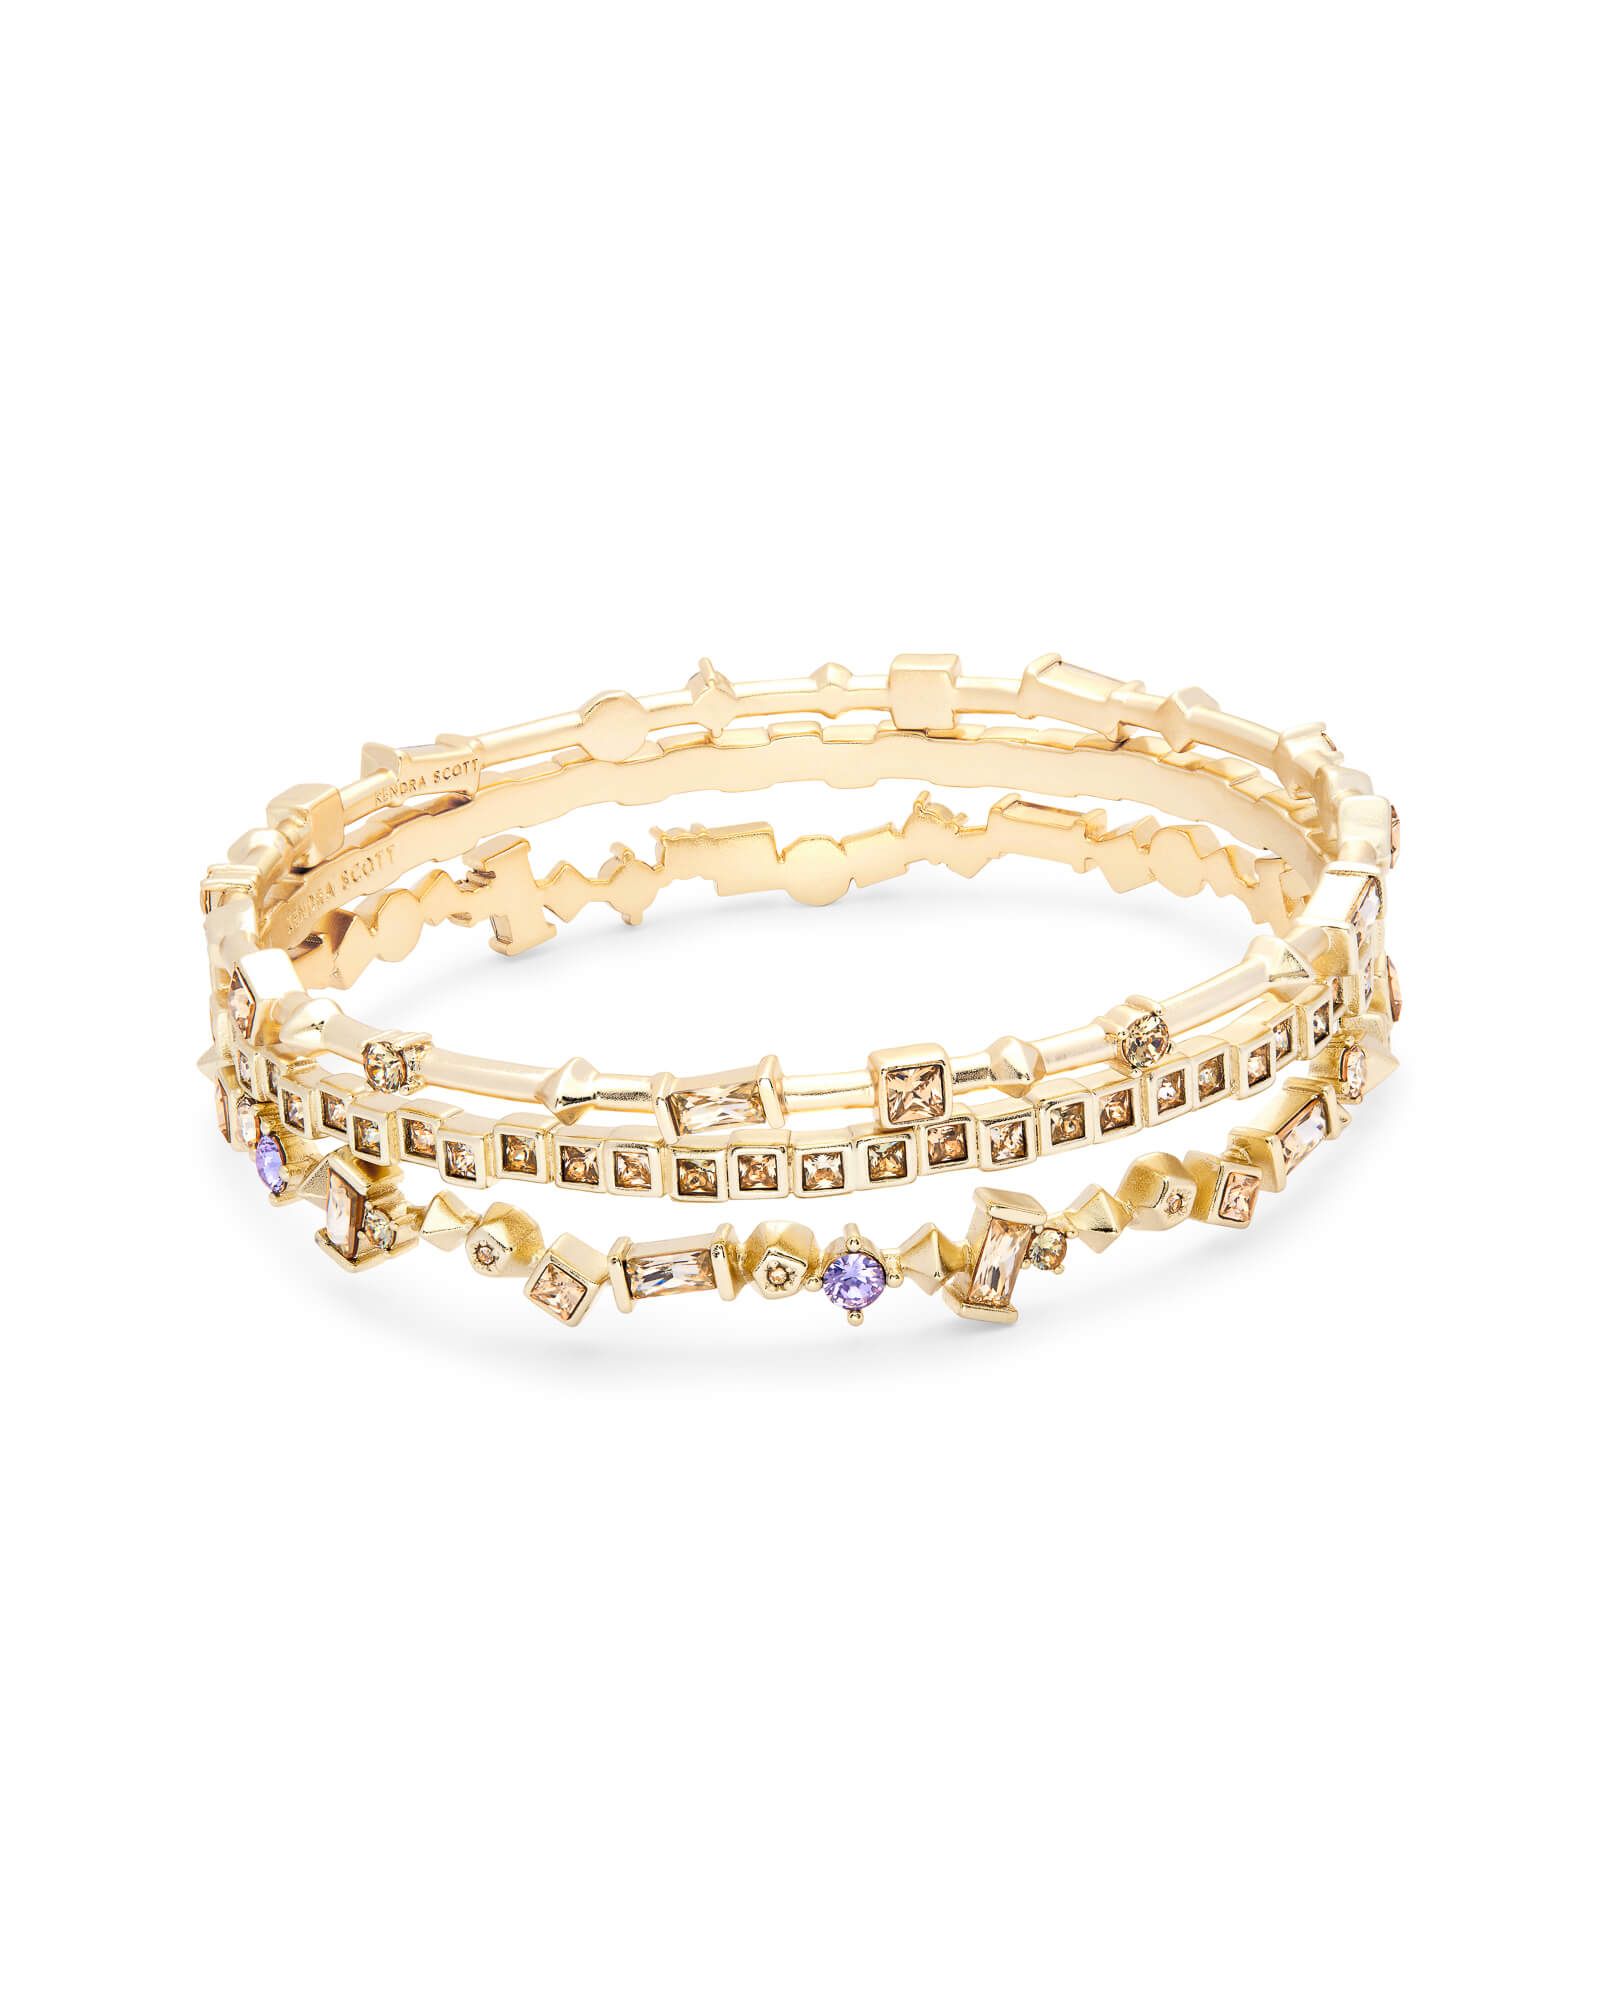 Malia Gold Bangle Bracelet Set in Smoky Mix | Kendra Scott